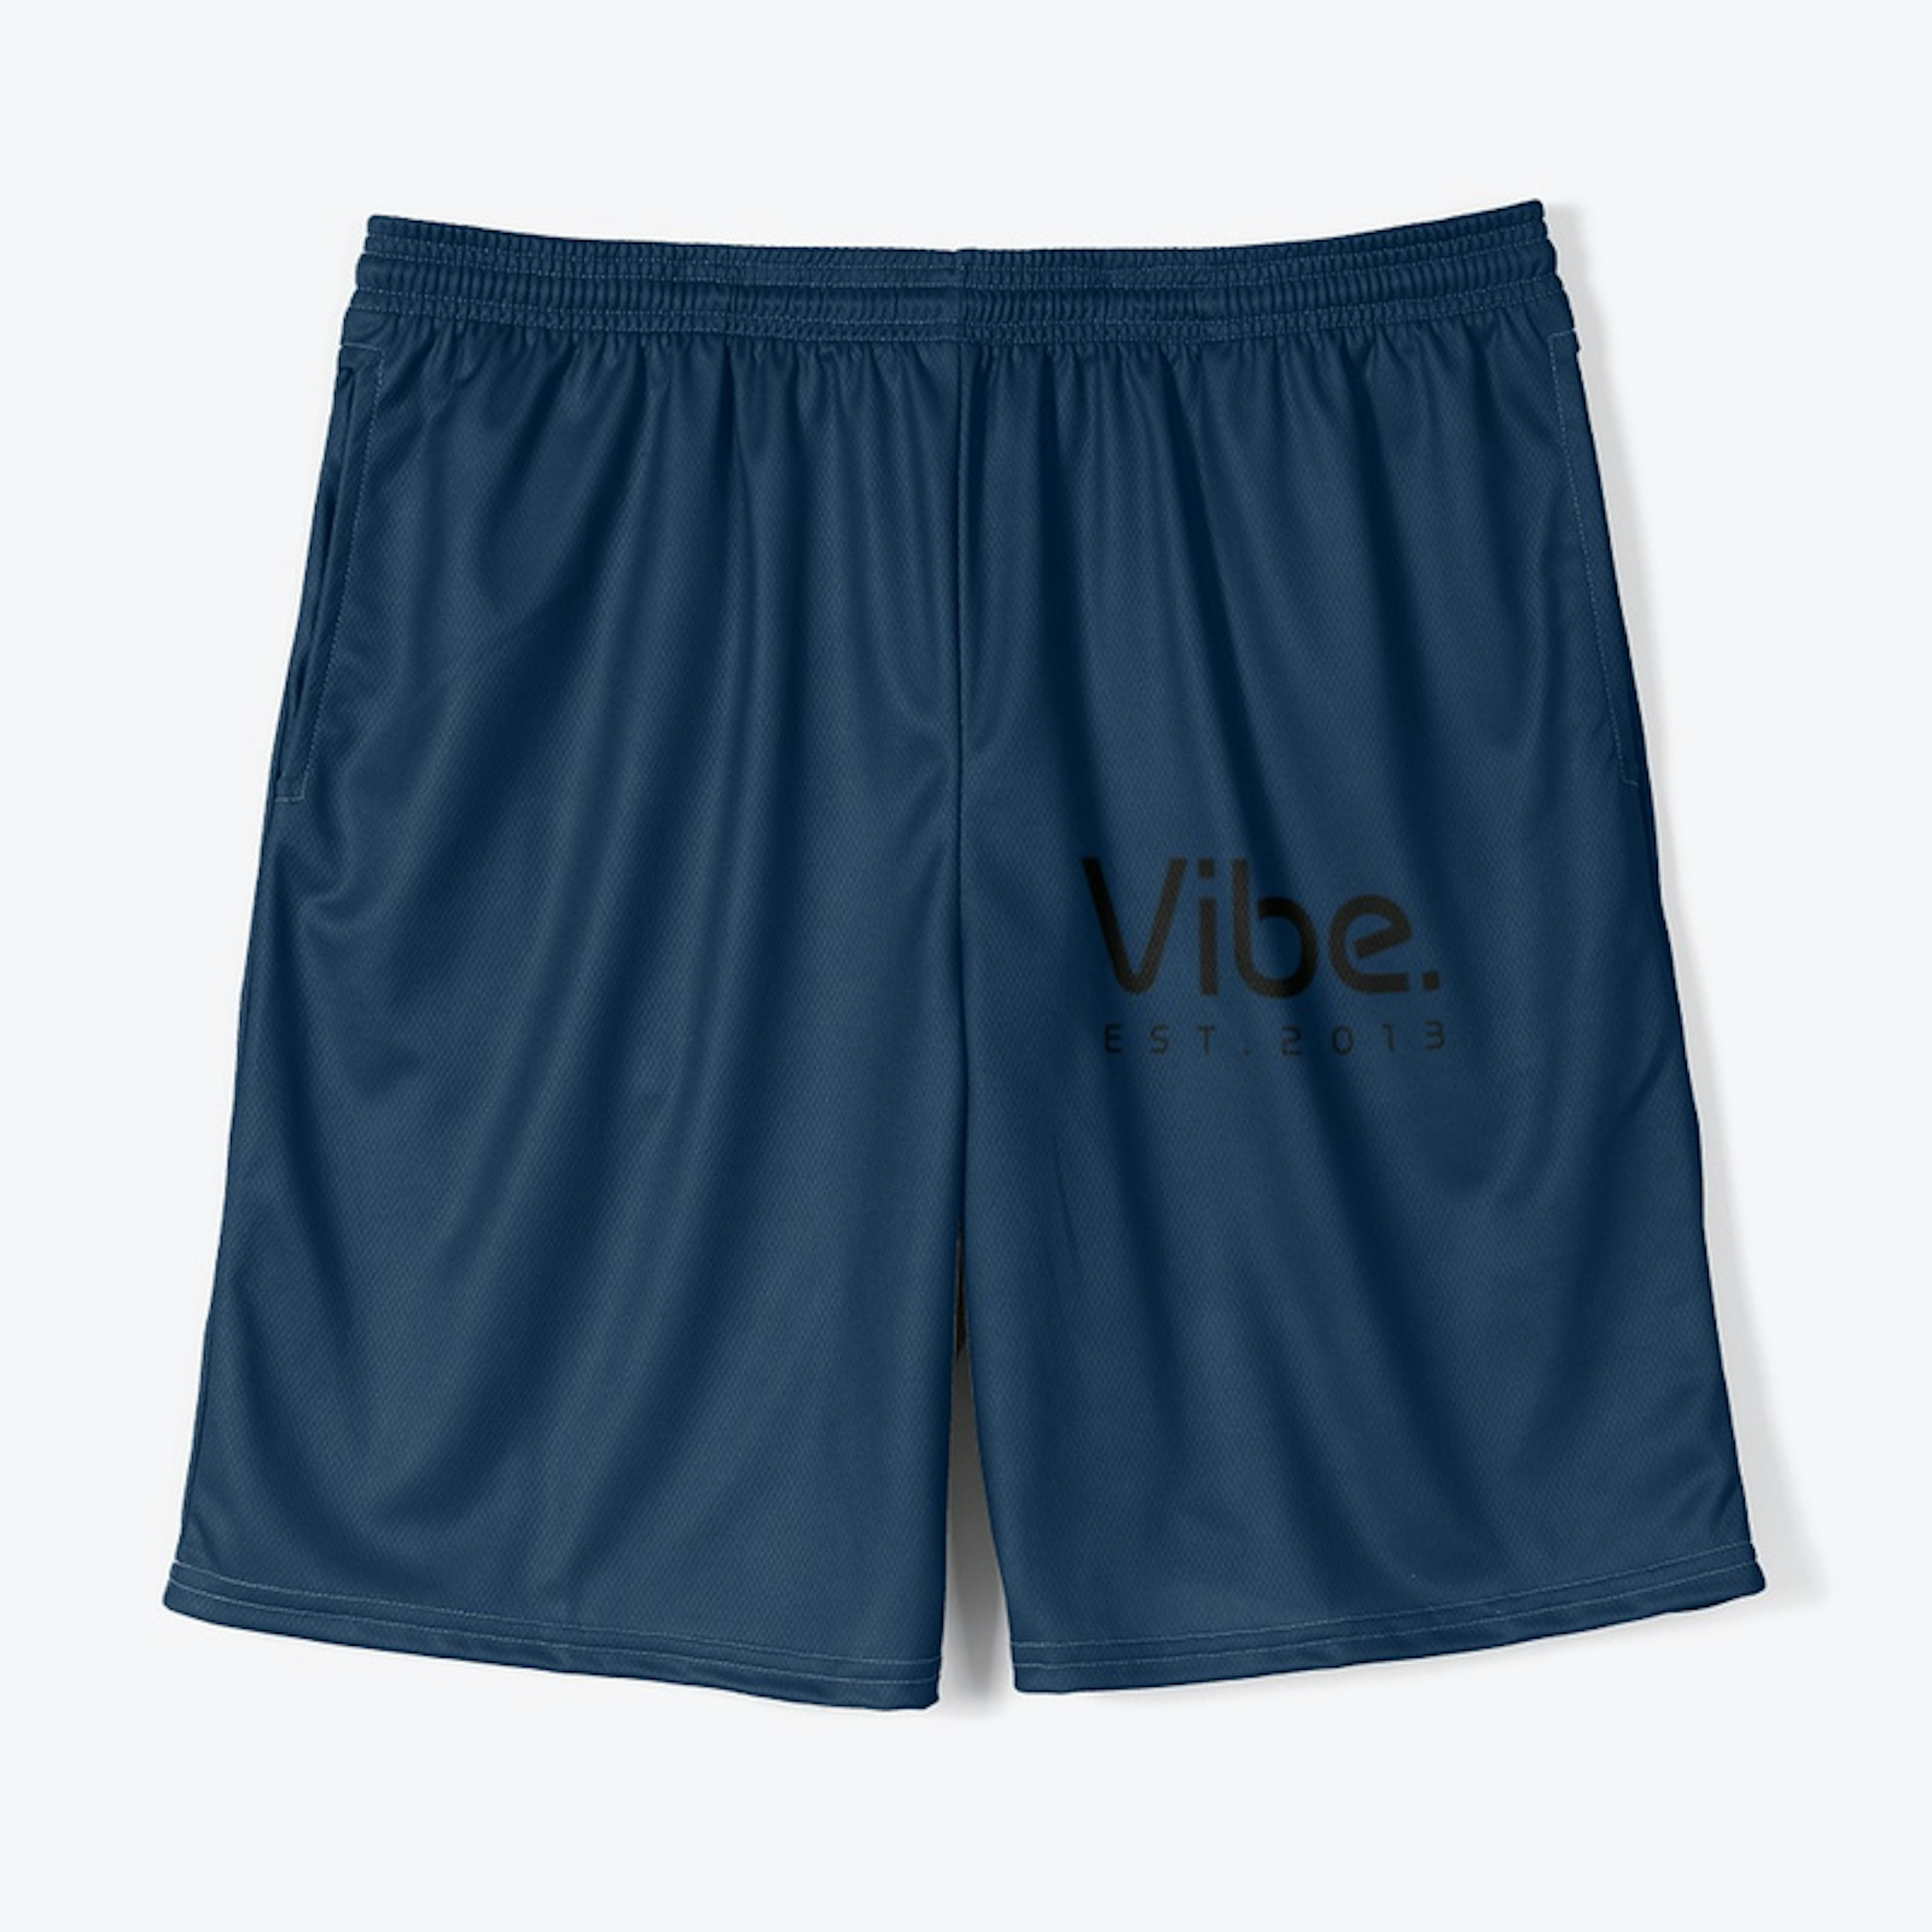 Vibe. Shorts